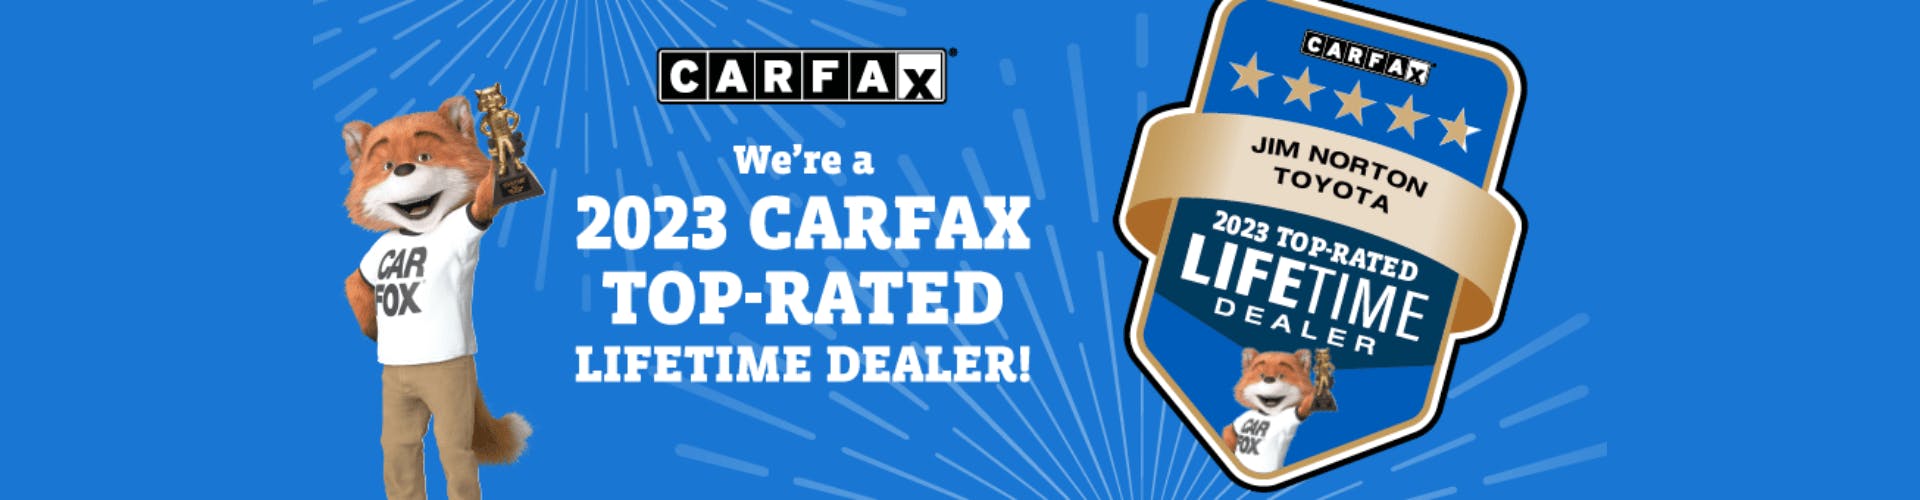 Carfax Top-rated Lifetime Dealer